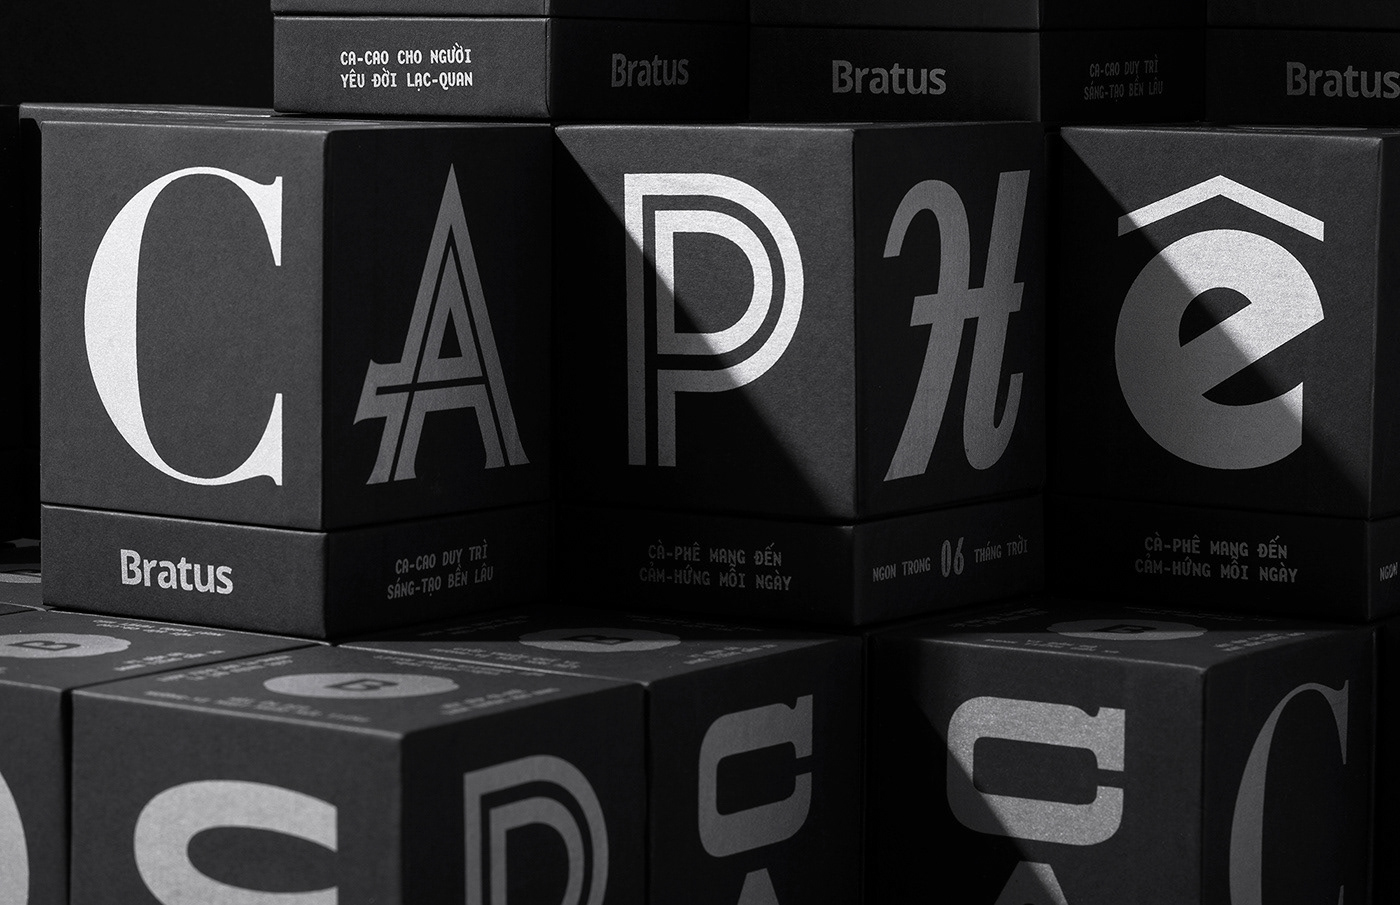 Typeface typography   font type design display font serif